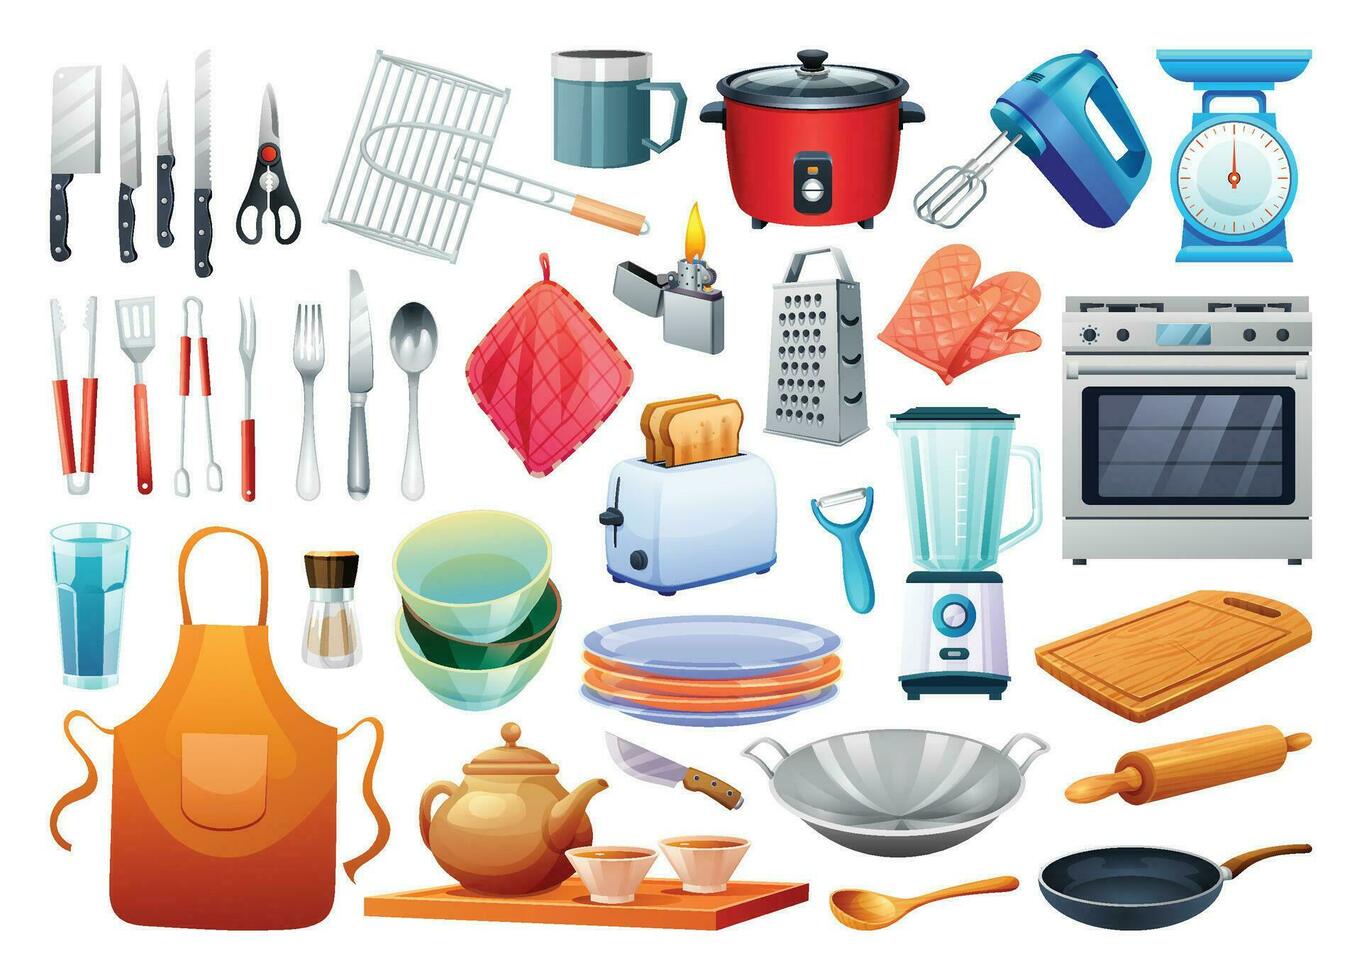 Set of kitchen utensils. Kitchen tools, Kitchenware collection vector illustration isolated on white background